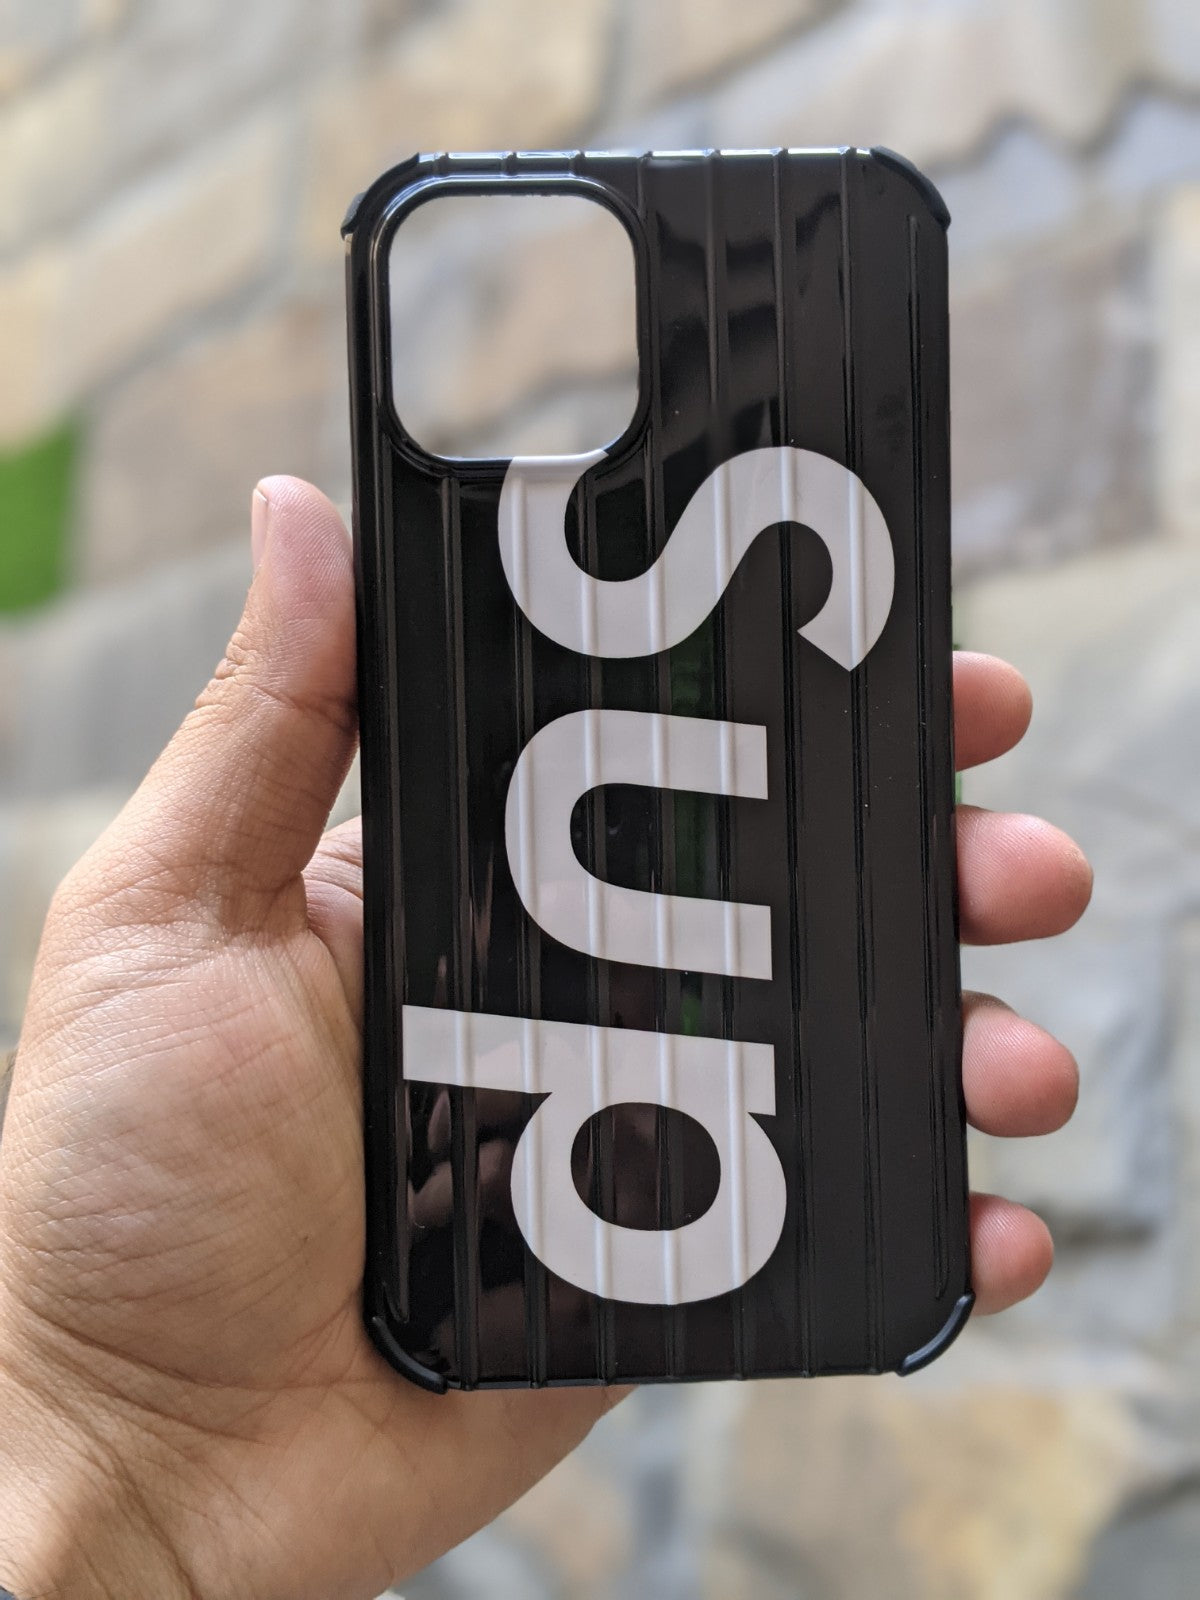 supreme iphone 12 case